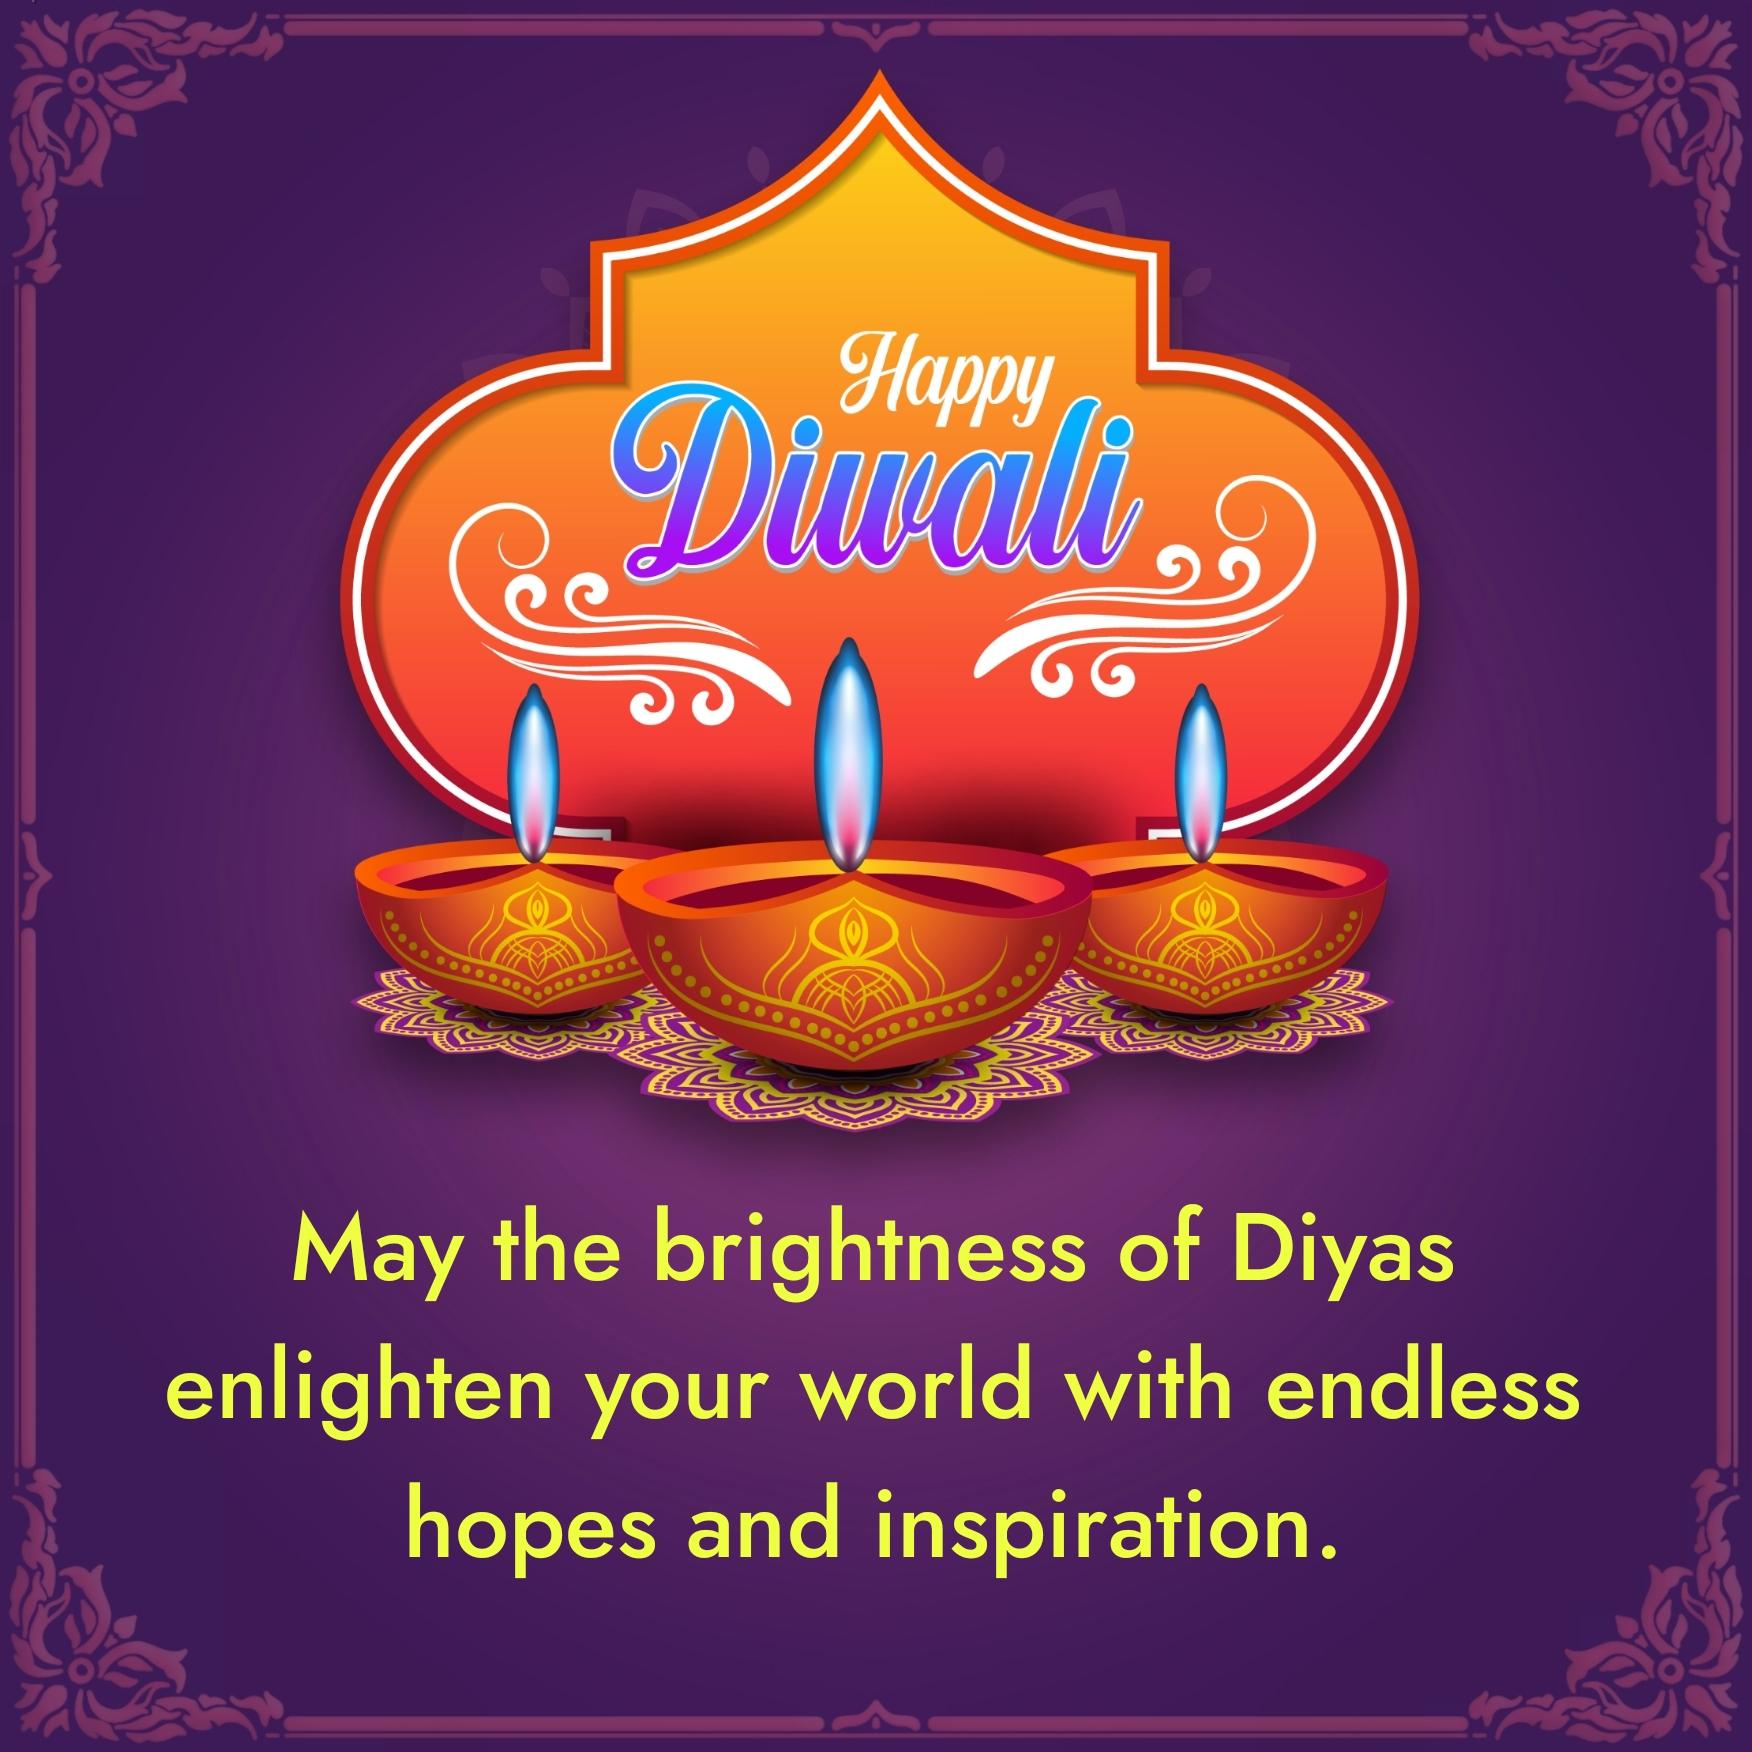 May the brightness of Diyas enlighten your world